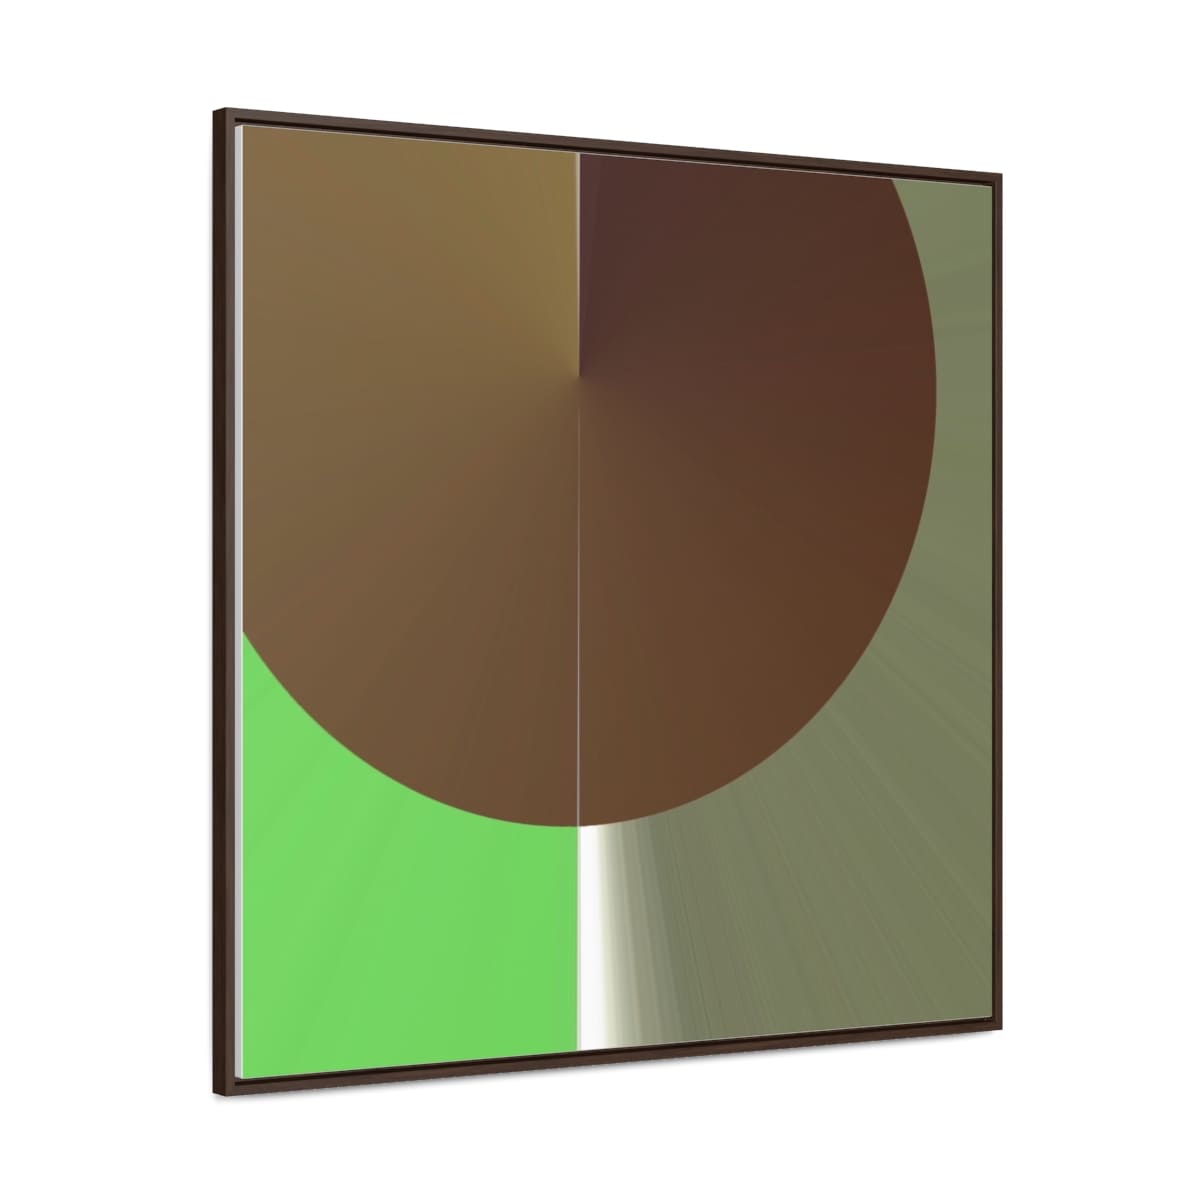 MiNIMA | Limited Edition

artandpicturesforhotels.com/shop/geometric…

#Minimal #Abstract #MiNiMA #LimitedEdition #AbstractArt #ArtForHotels #GeometricArt